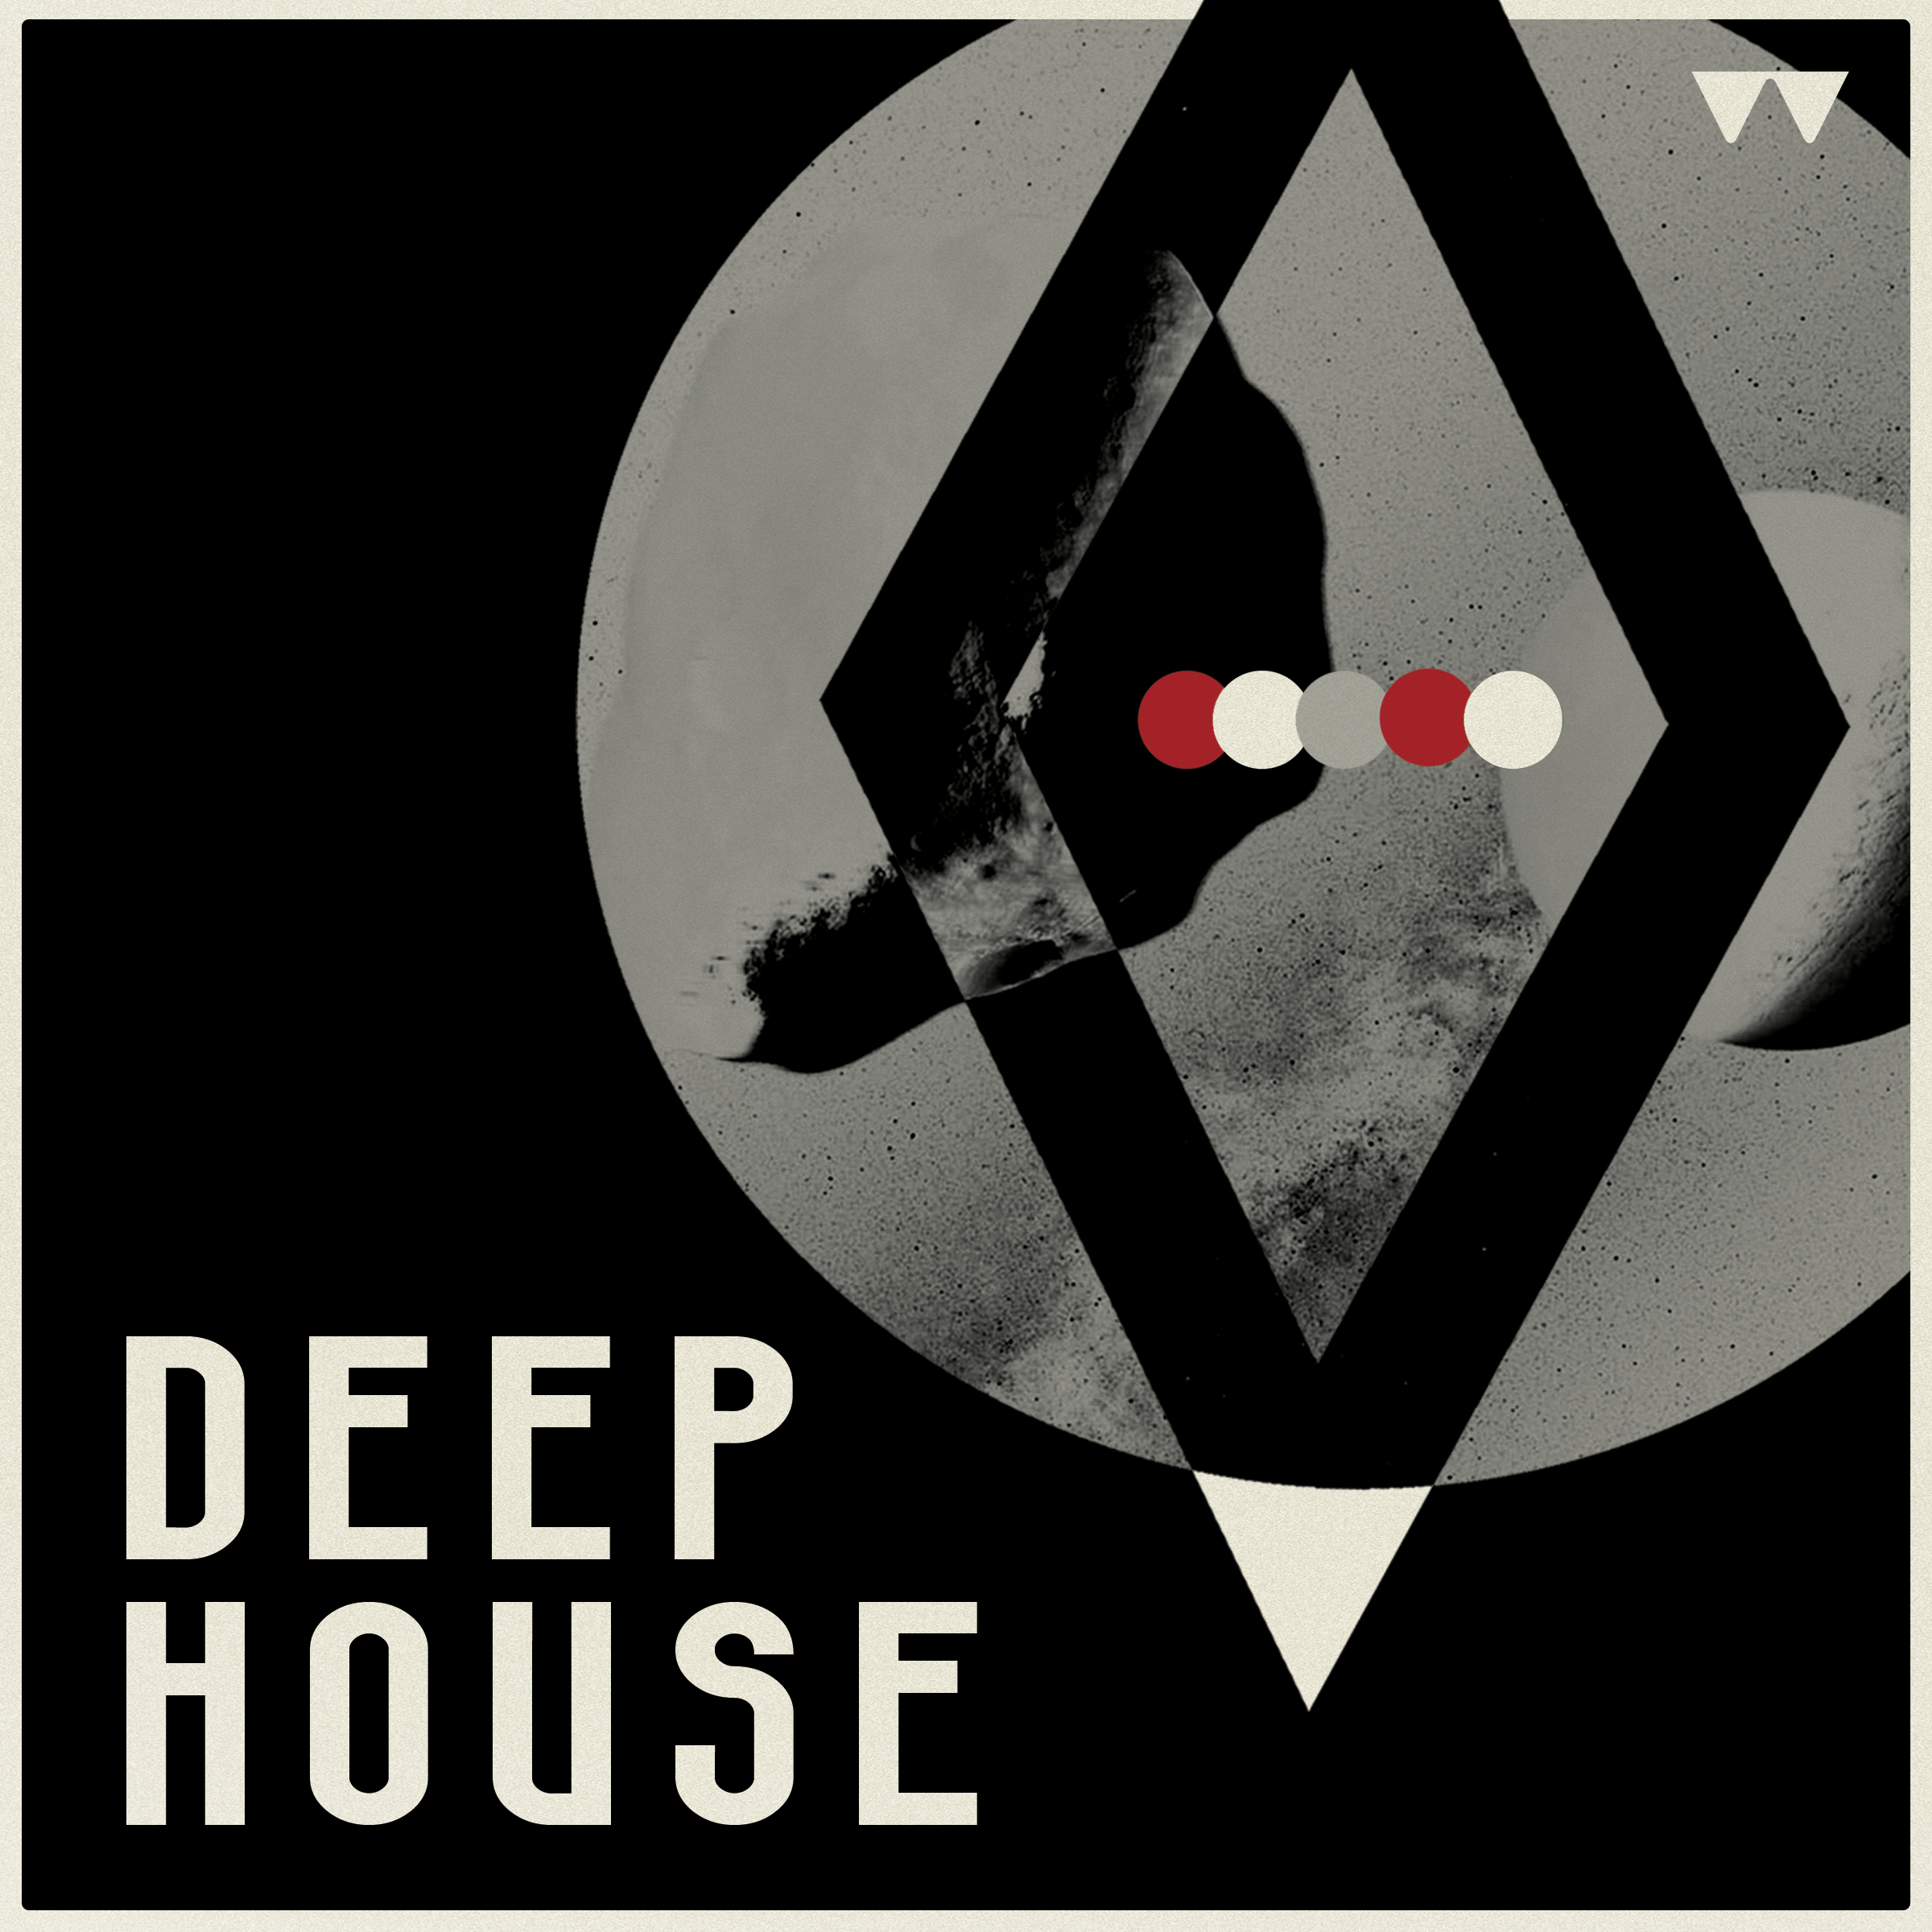 Waveform Recordings - Deep House